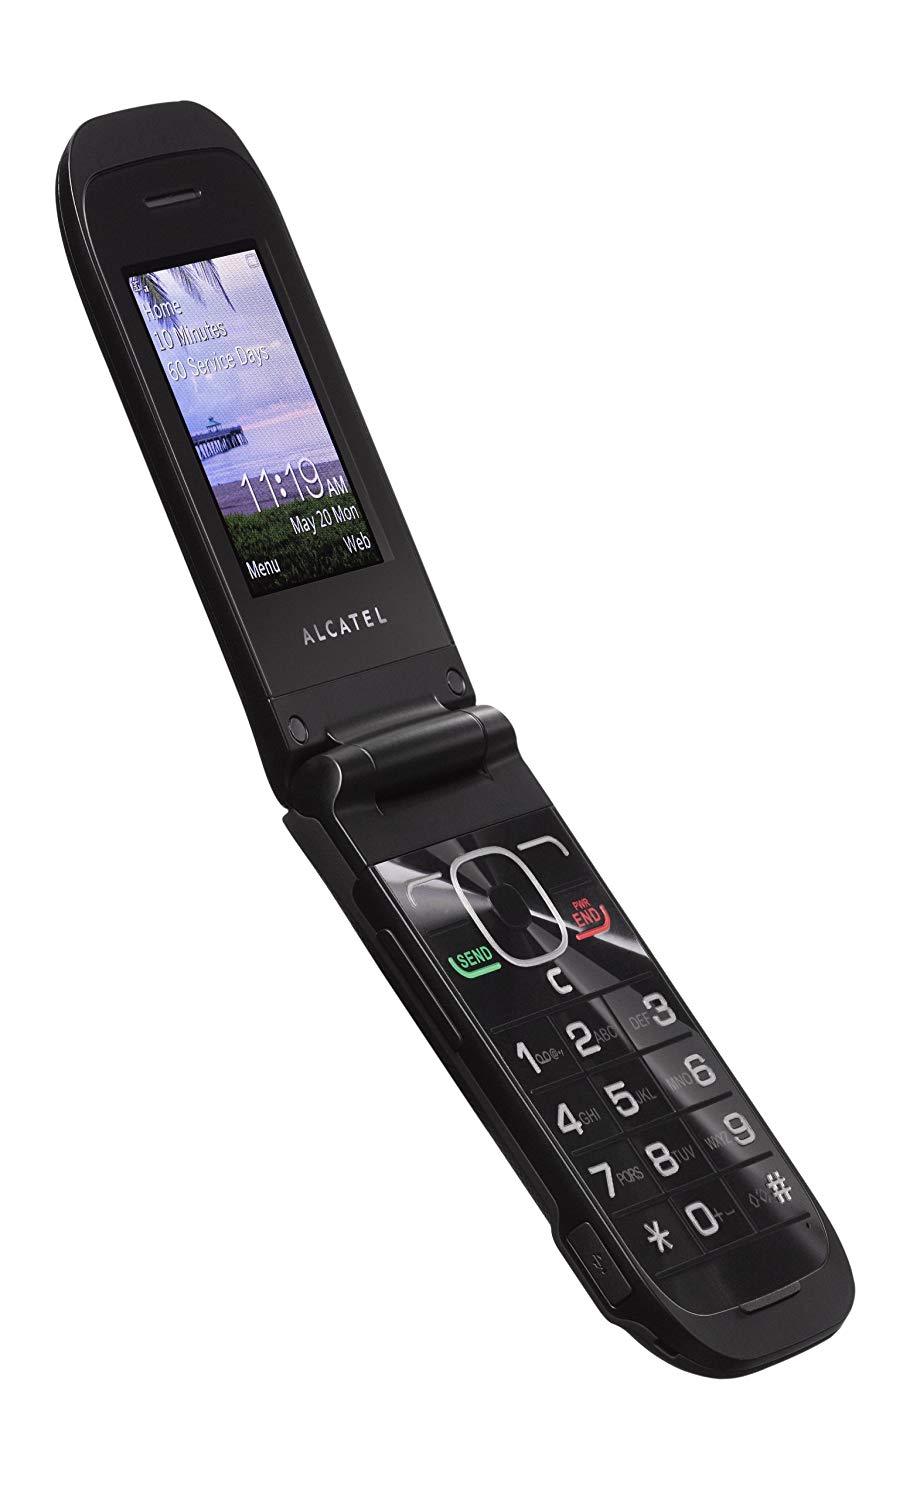 Alcatel Big Easy Flip, Double Minutes Cell Phone (TRACFONE) - BIG nano